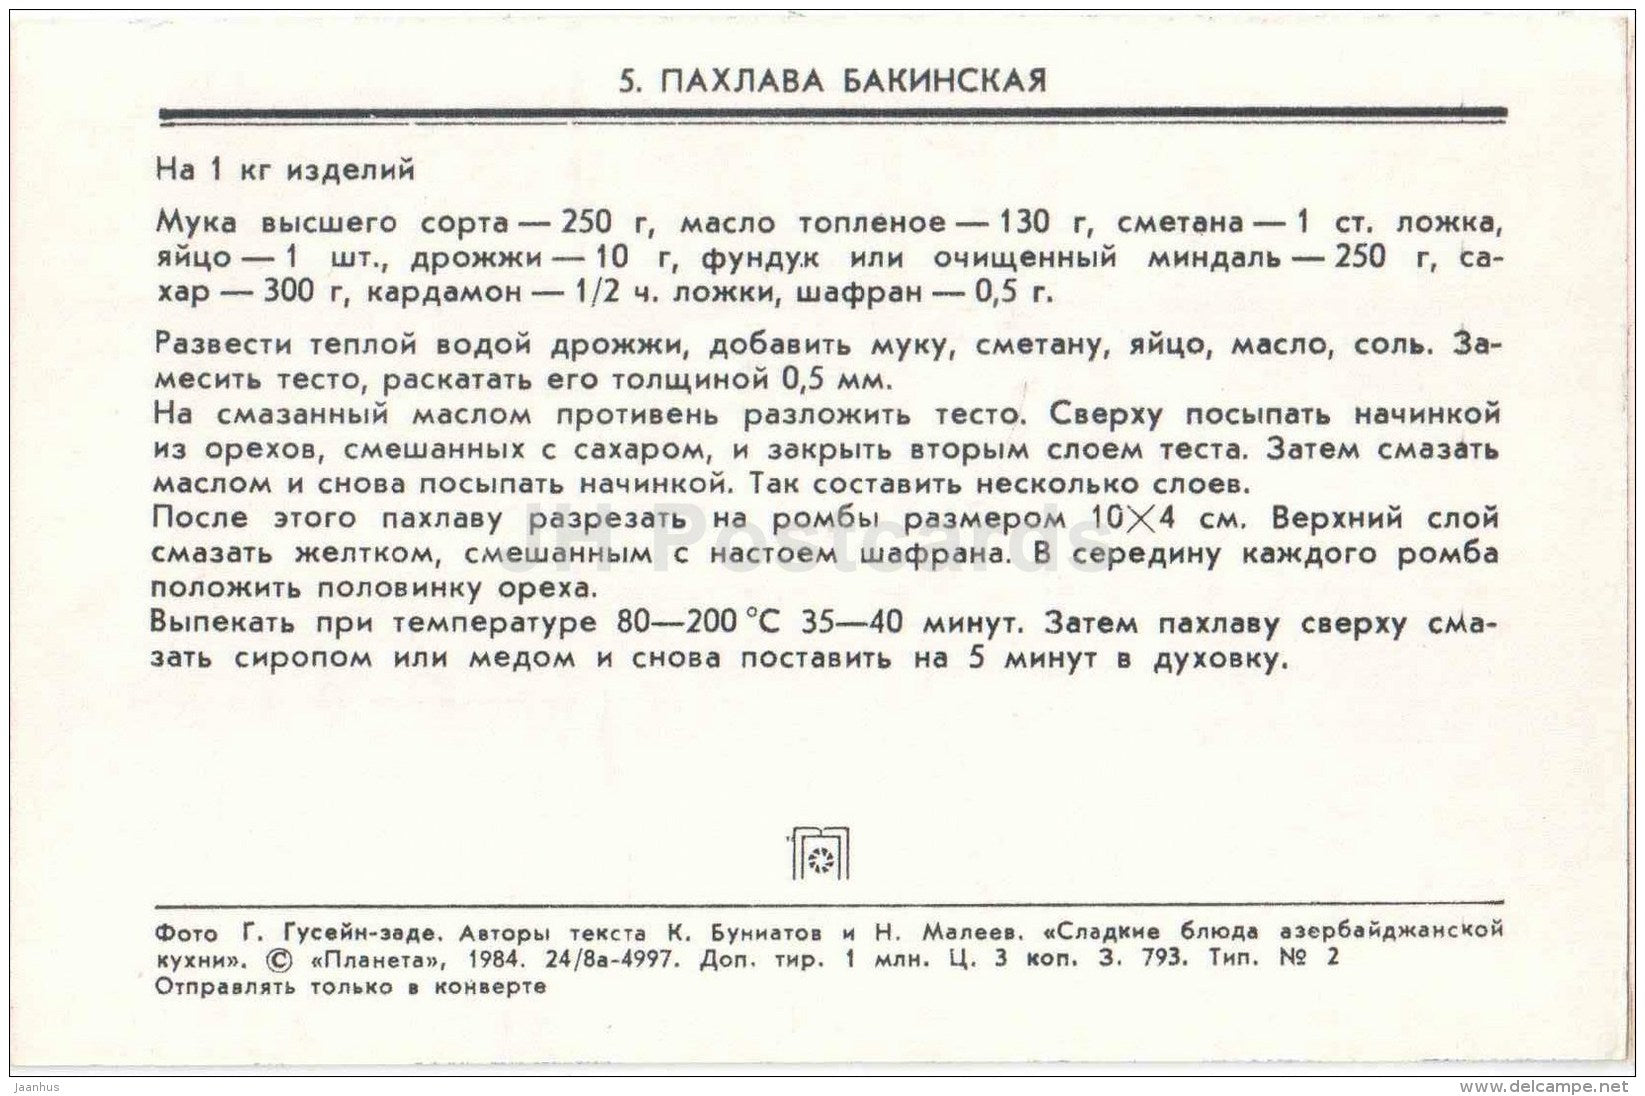 Baku Pakhlava - dishes - Azerbaijan dessert - cuisine - 1984 - Russia USSR - unused - JH Postcards